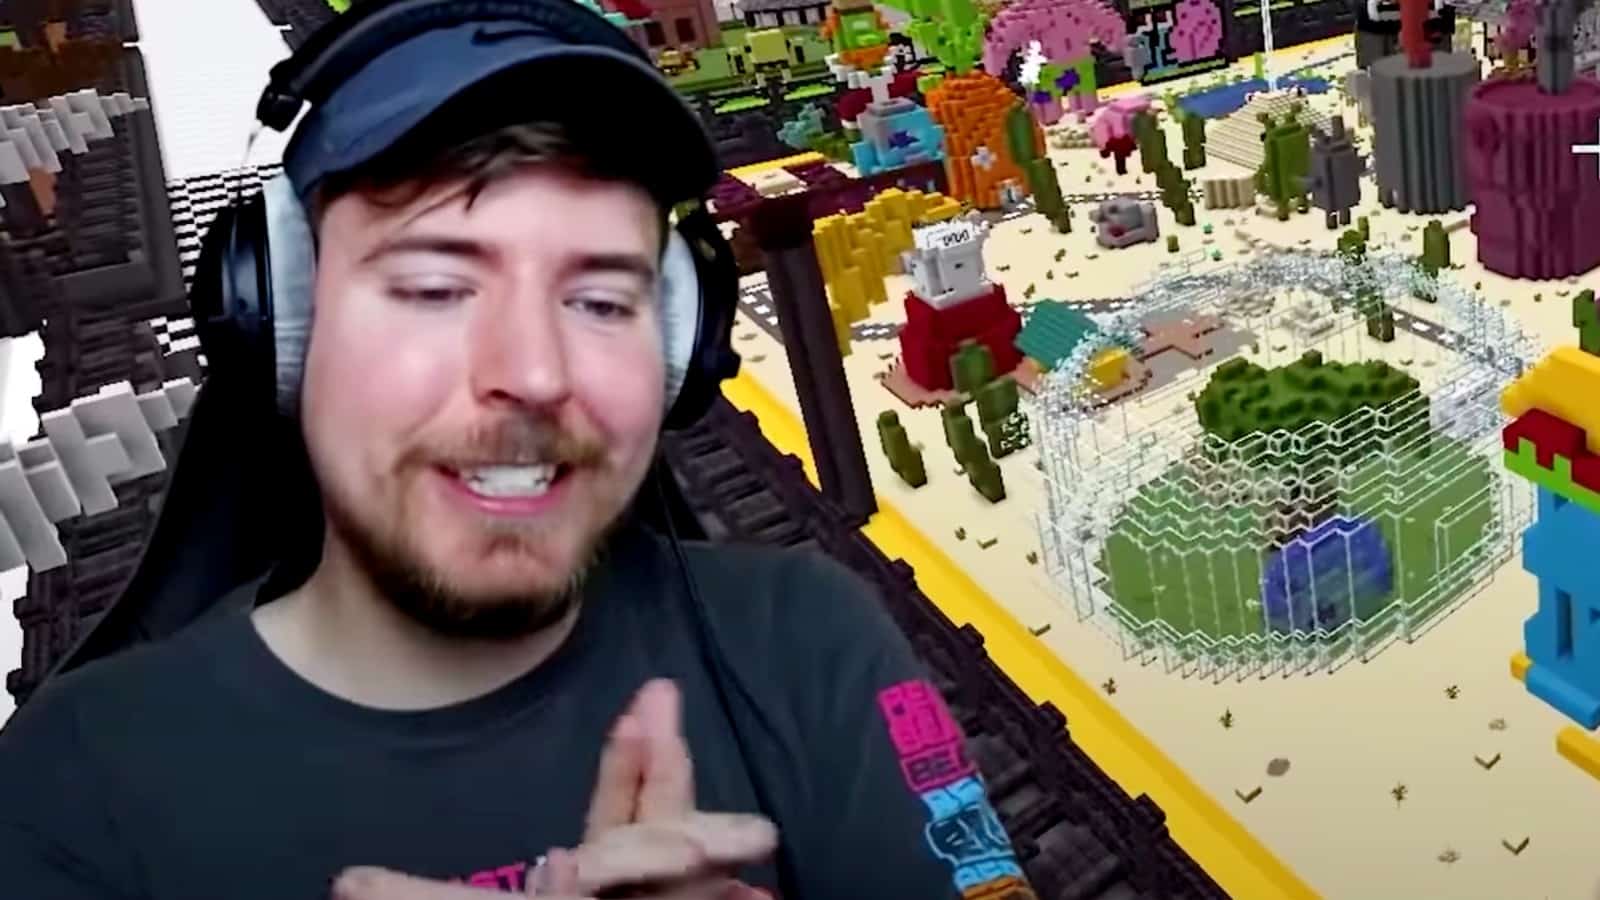 MrBeast in front of a cartoon themed Minecraft world